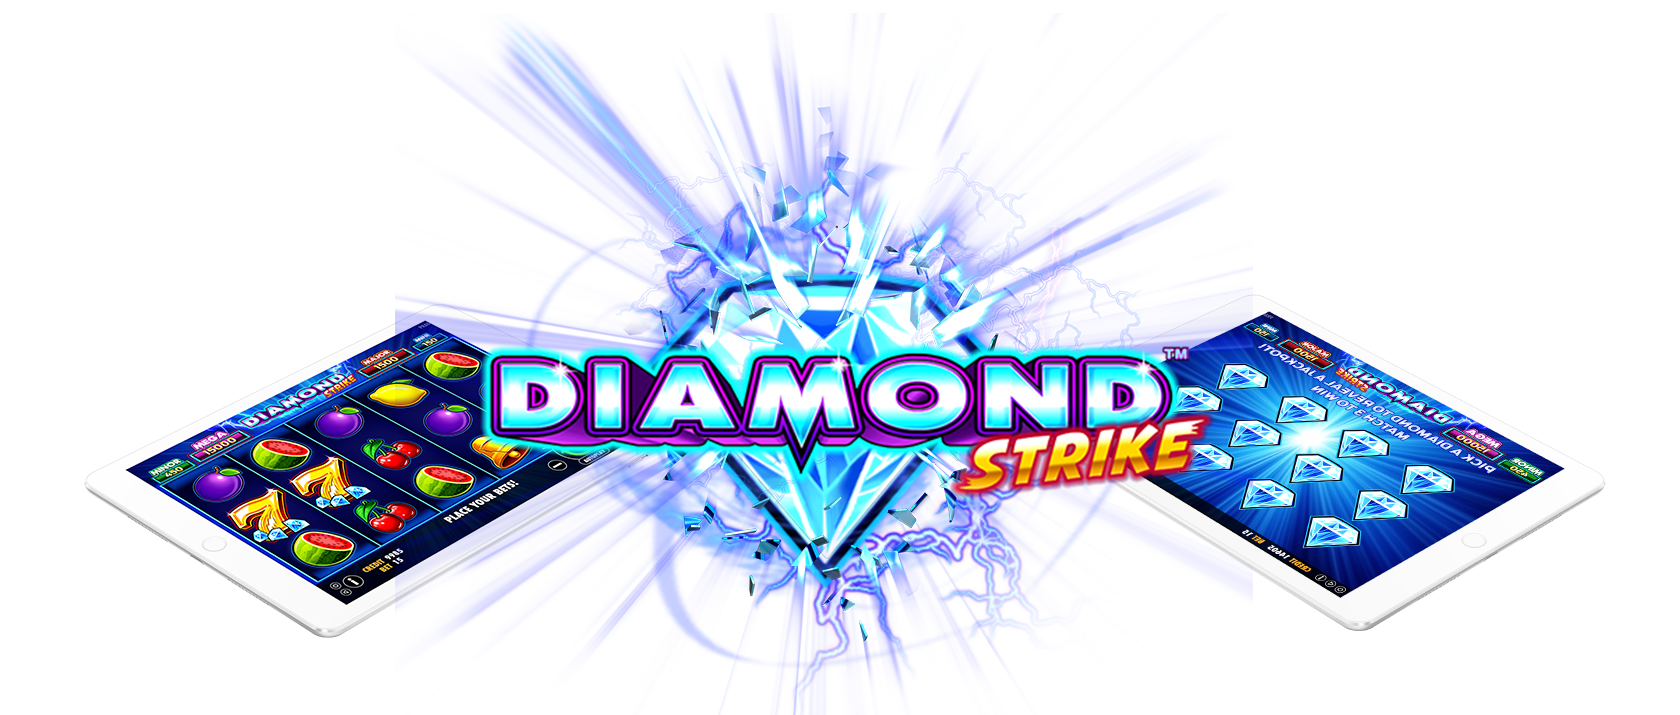 diamond strike slots game logo